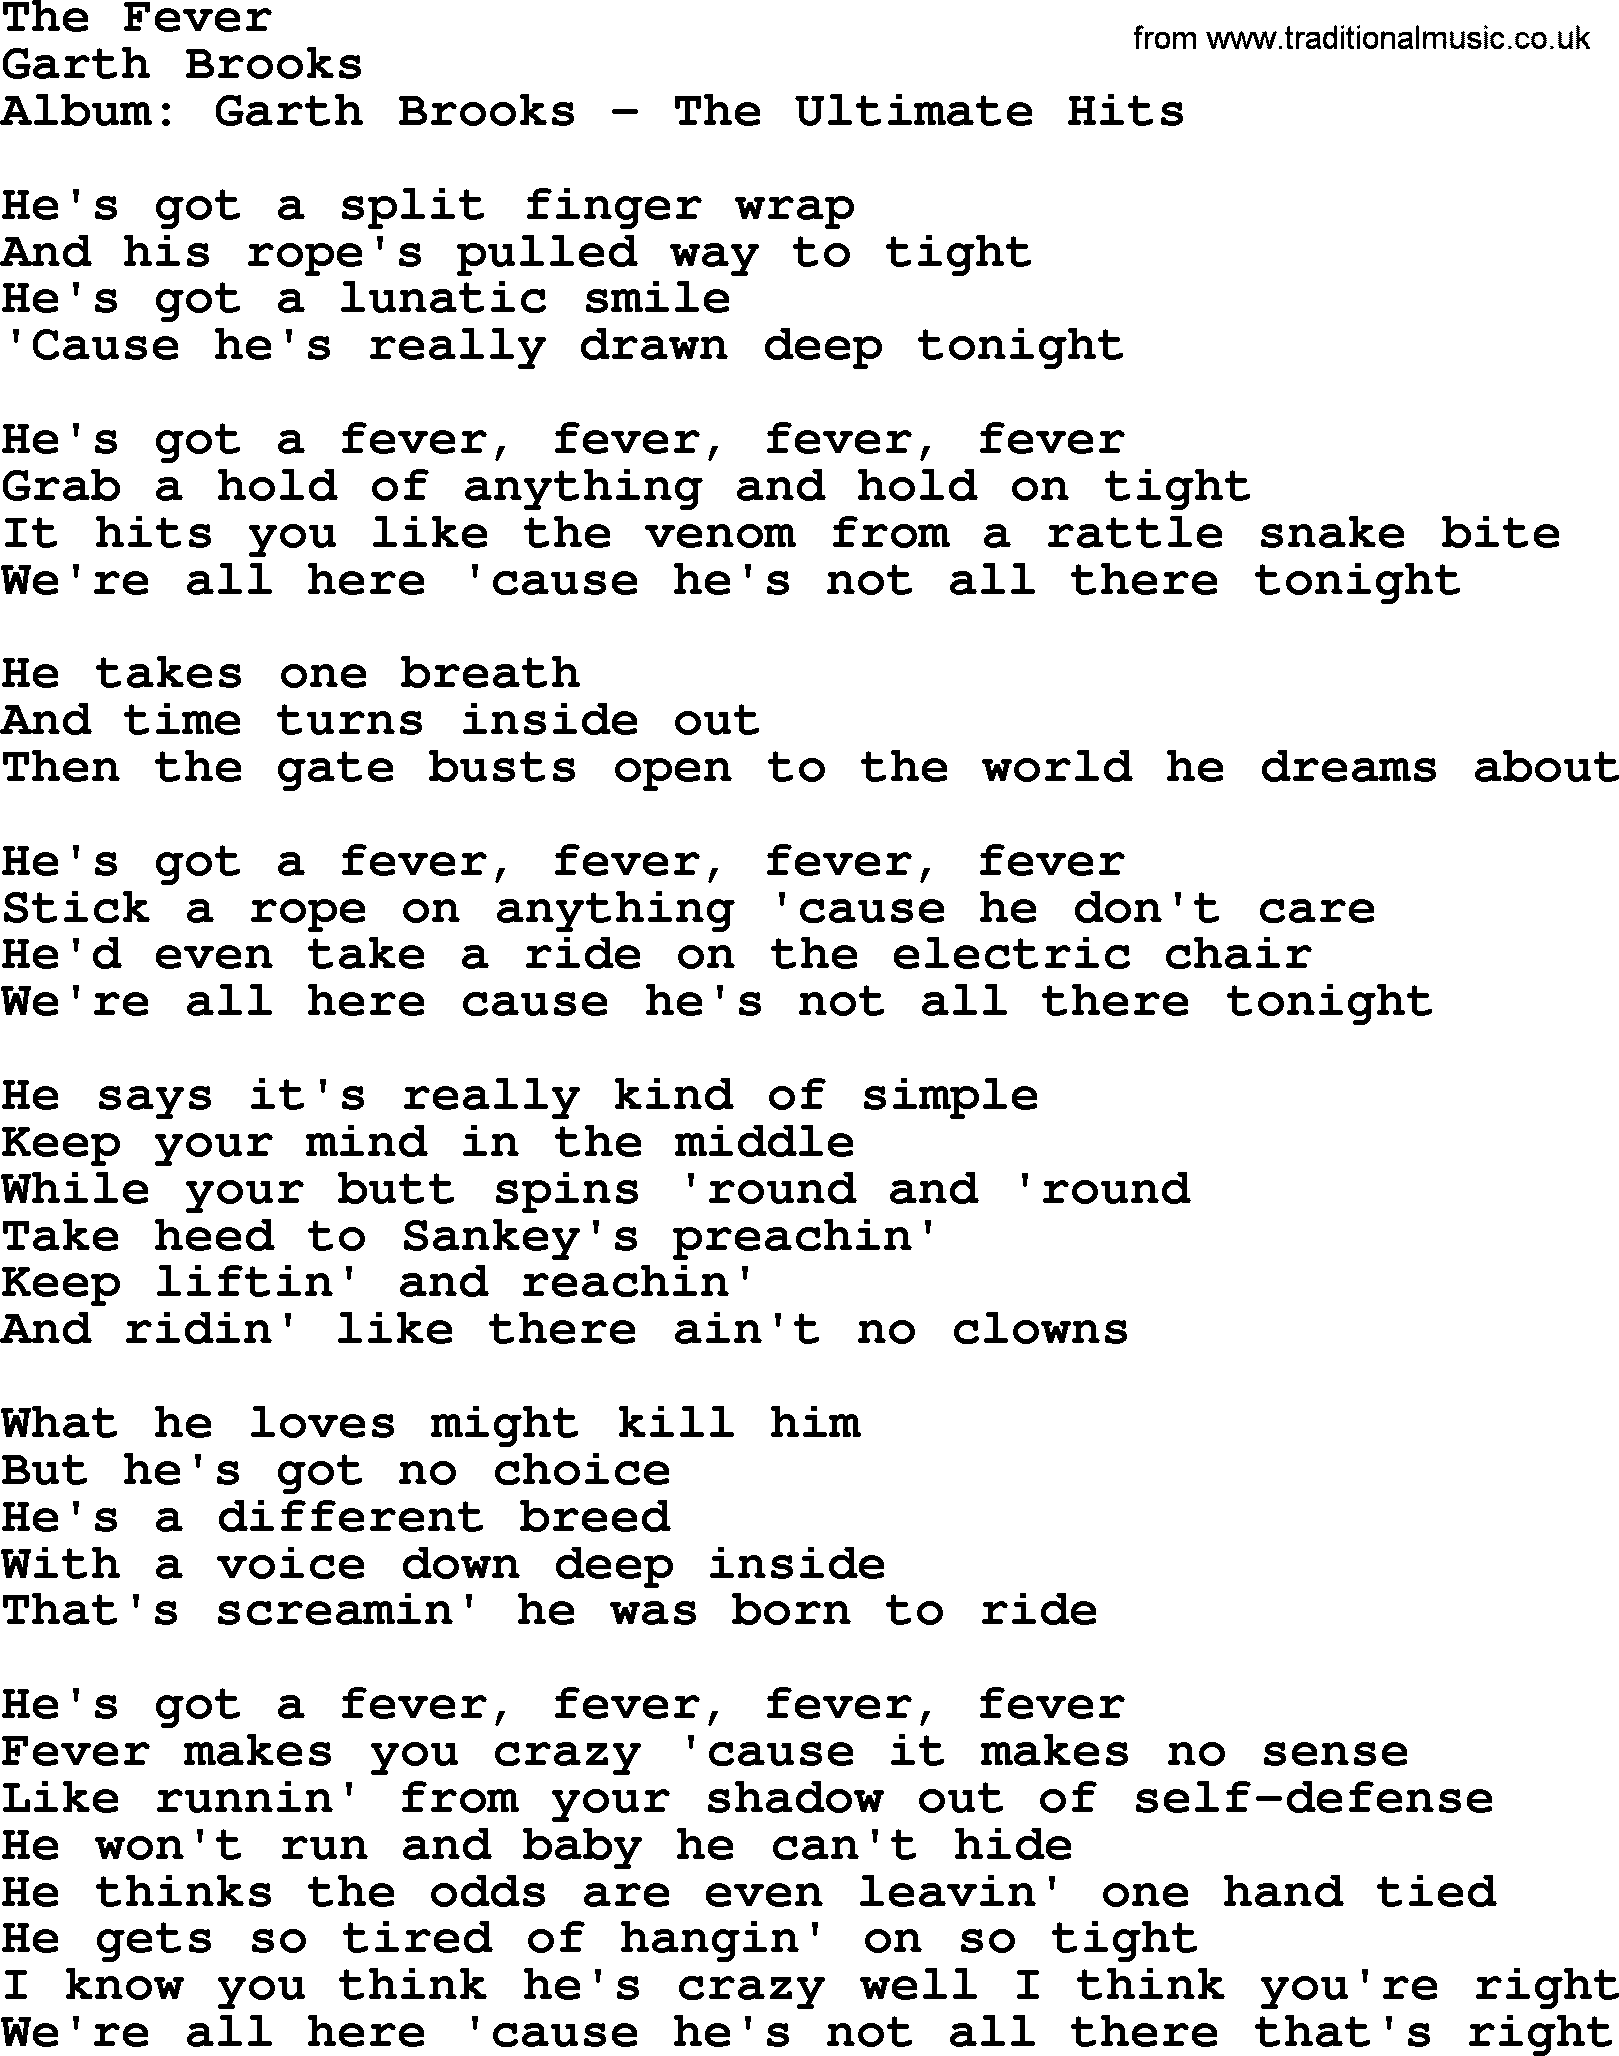 Garth Brooks song: The Fever, lyrics